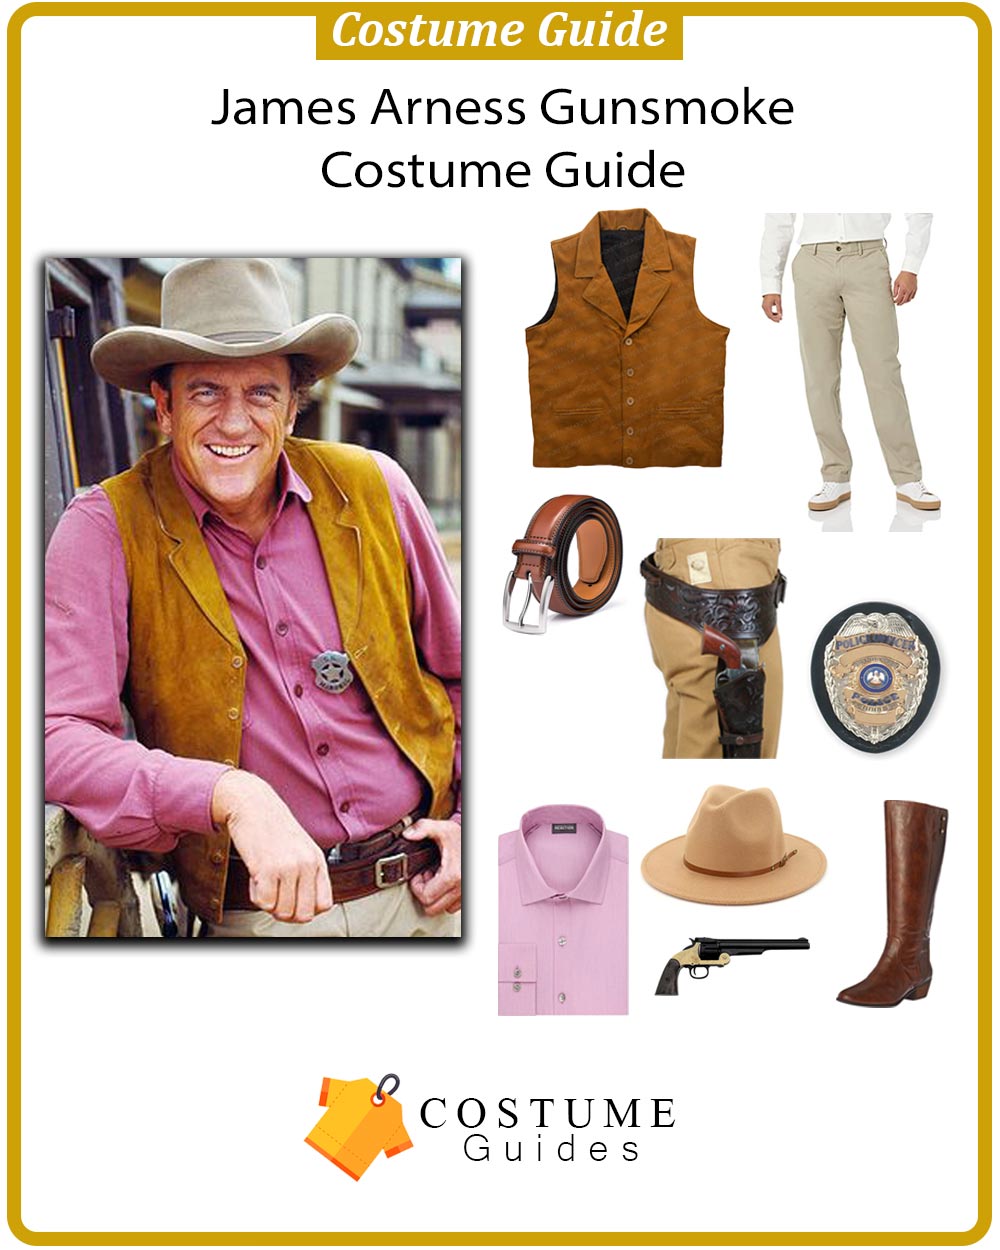 James Arness Gunsmoke Costume Guide